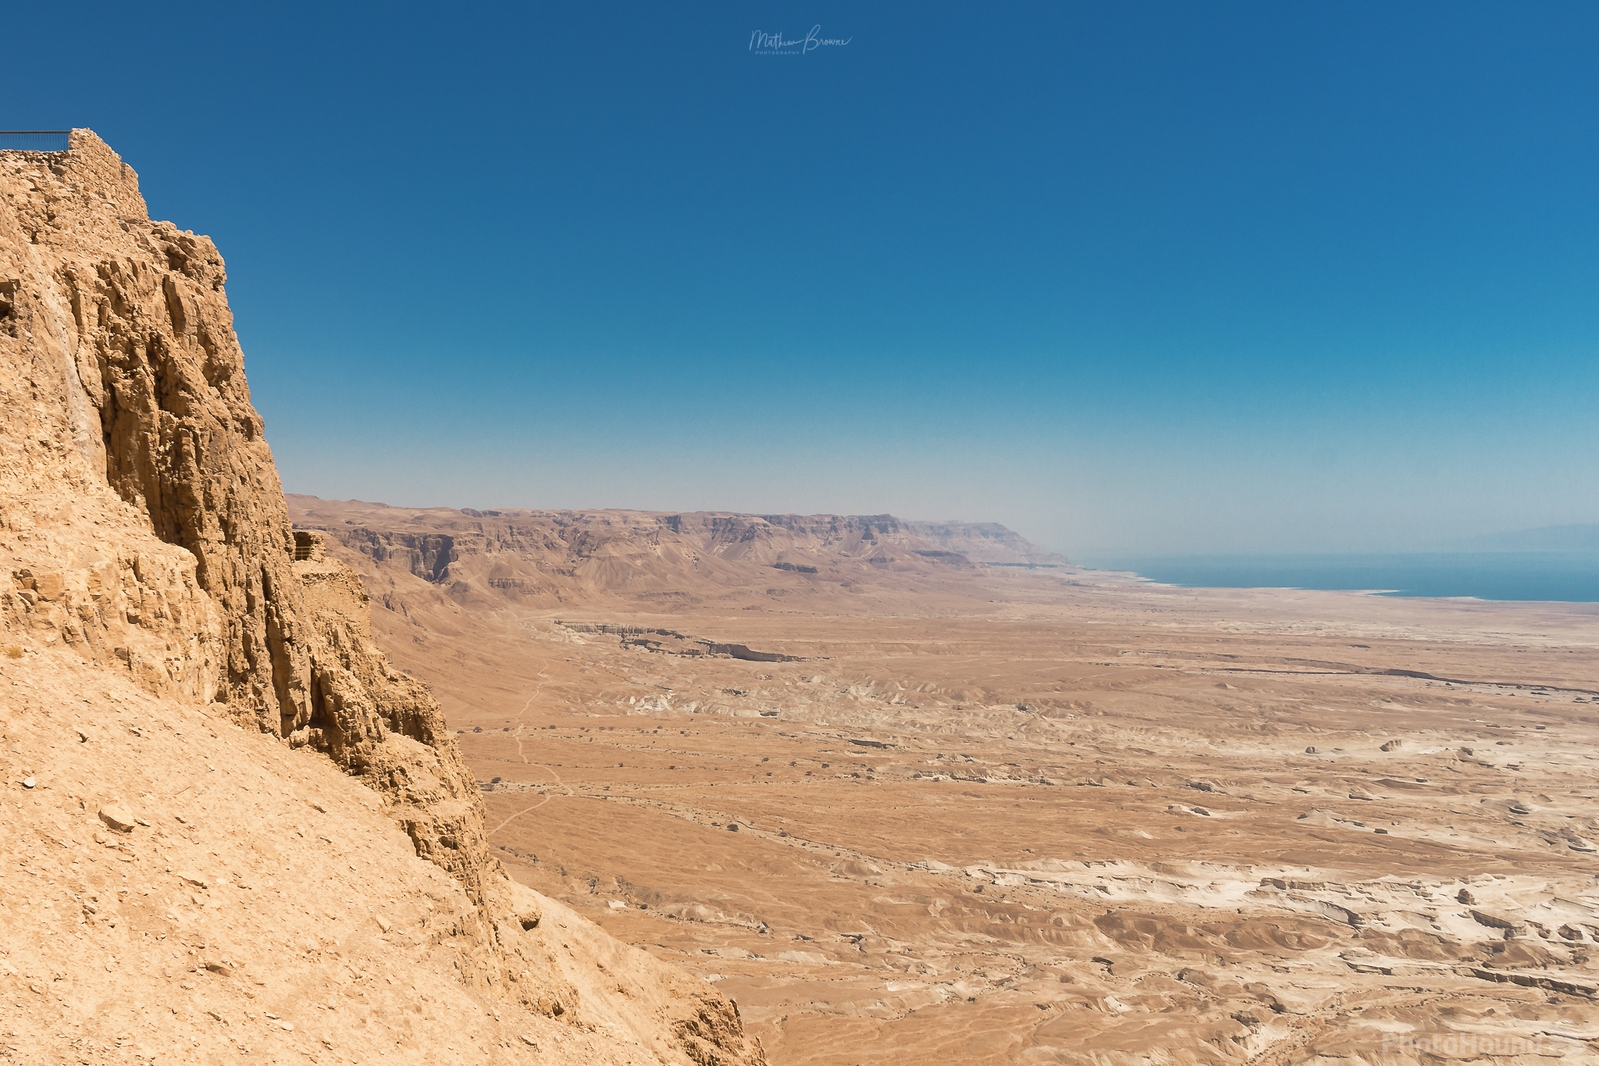 Image of Masada by Mathew Browne